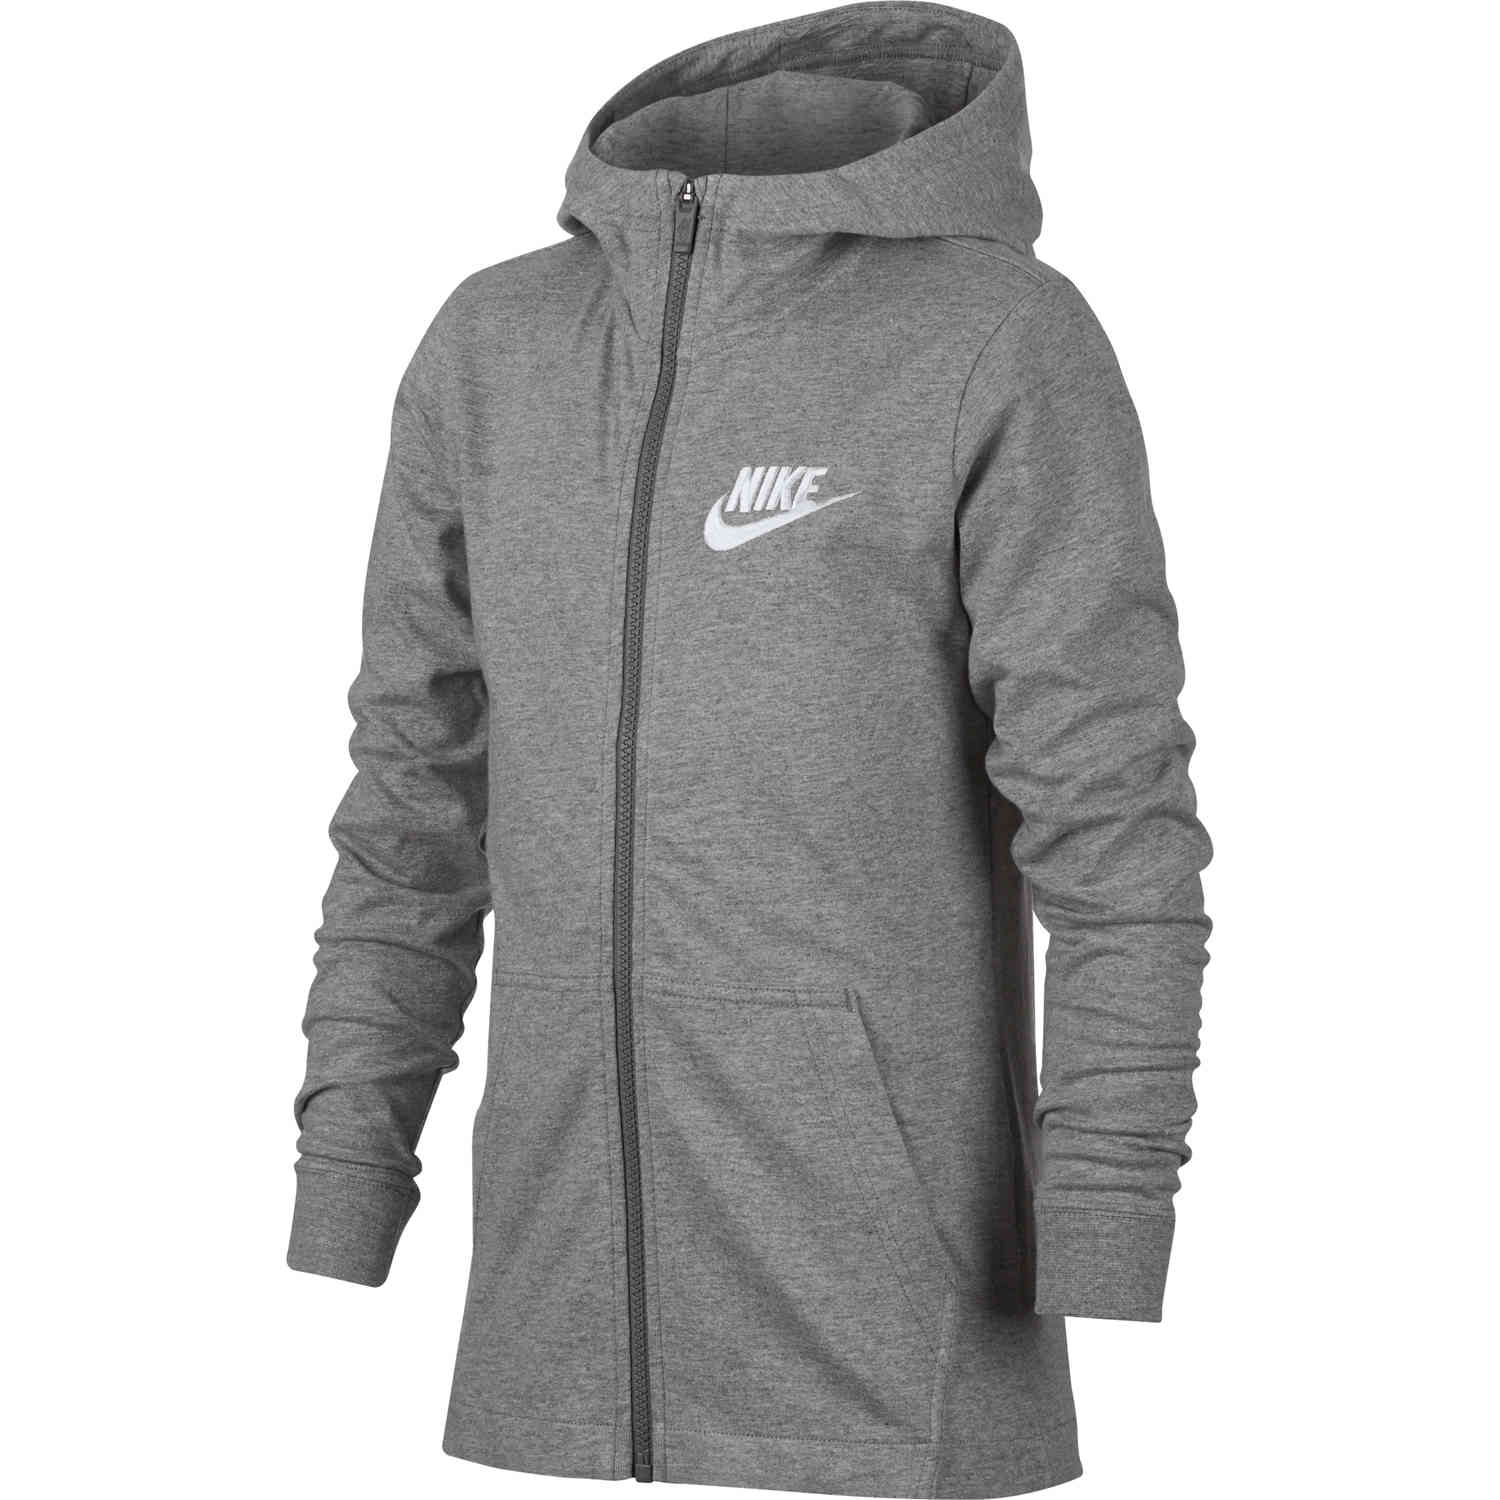 Kids Nike Sportswear Full-zip Hoodie - Dark Grey Heather - SoccerPro